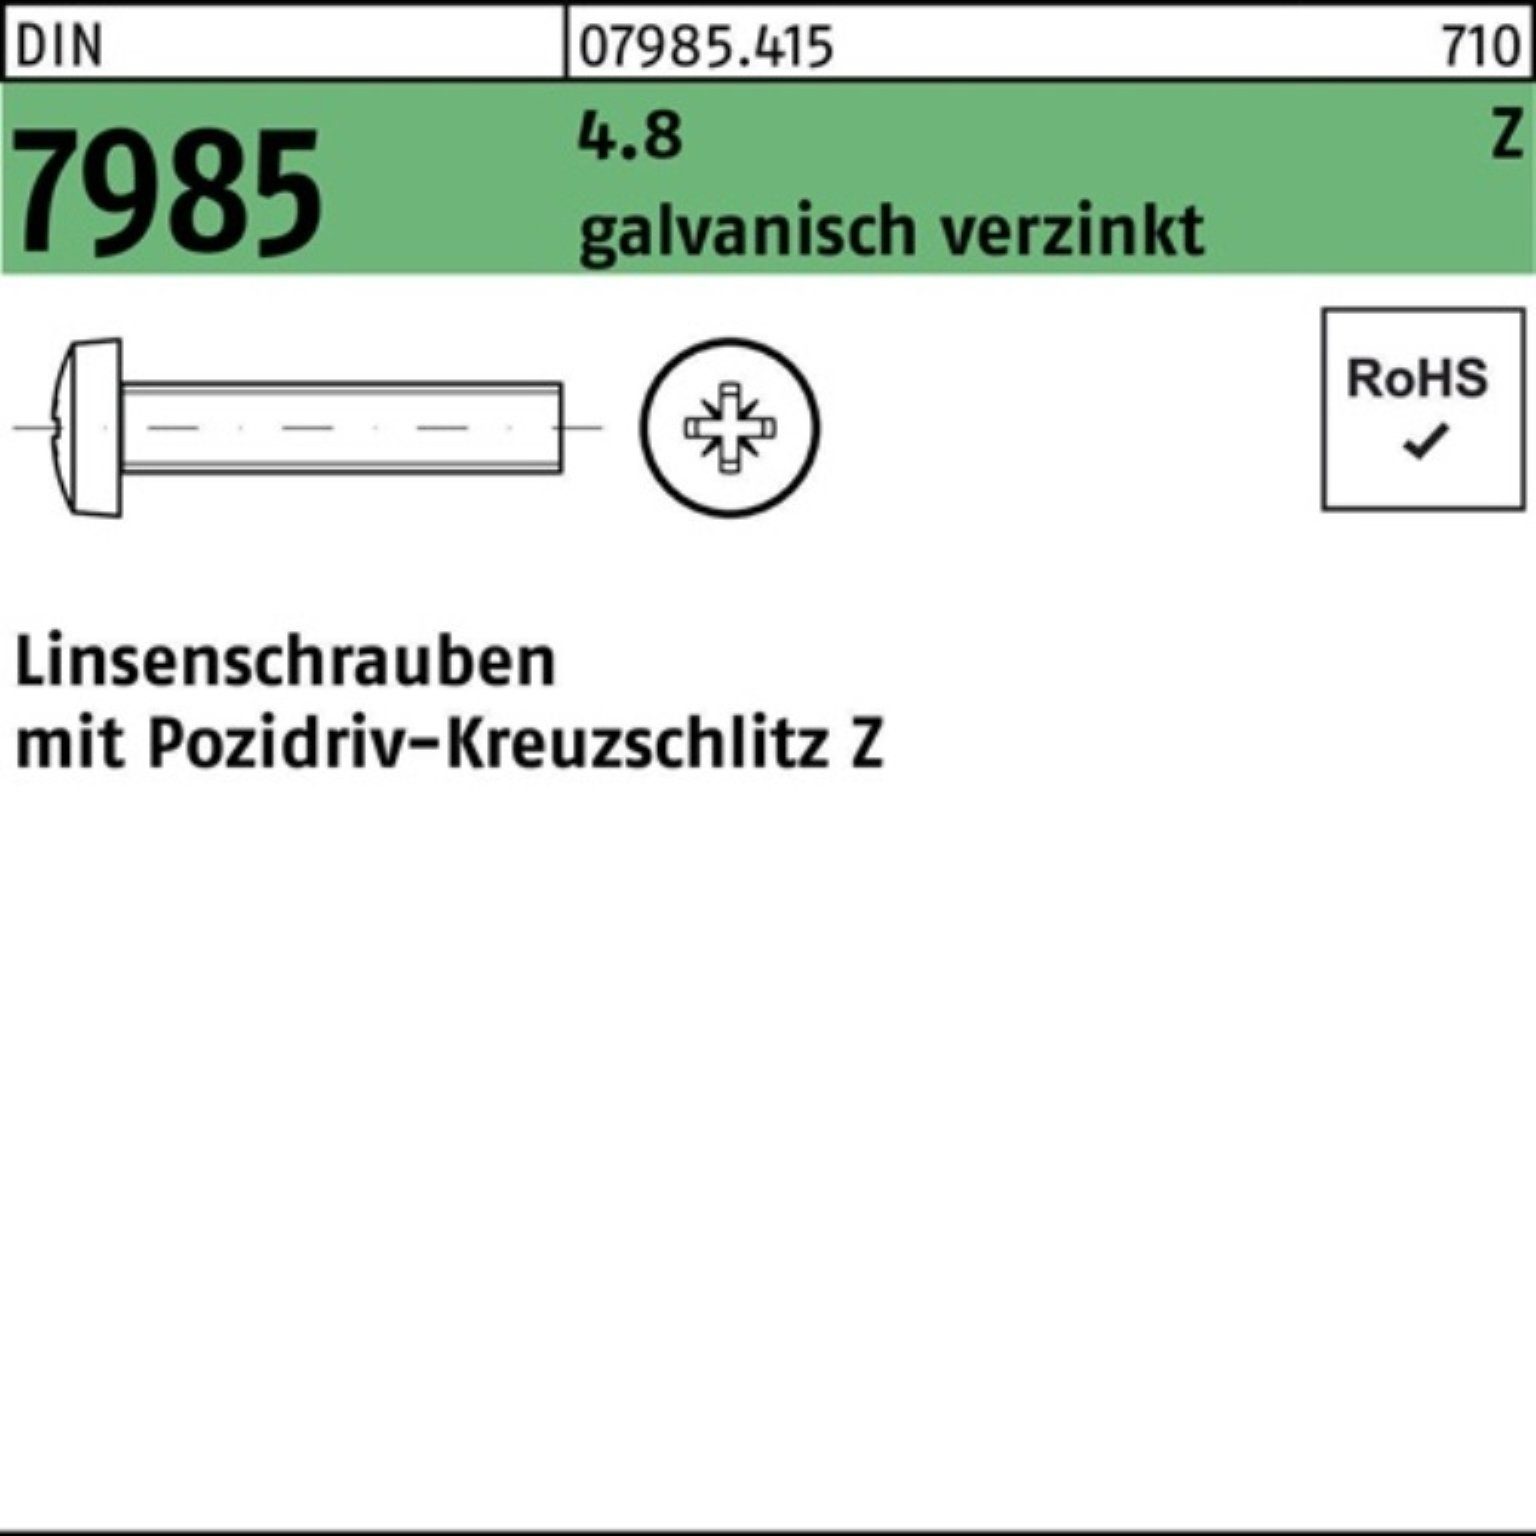 DI Linsenschraube Linsenschraube 4.8 M5x70-Z 200St. Pack 7985 200er PZ Reyher galv.verz. DIN